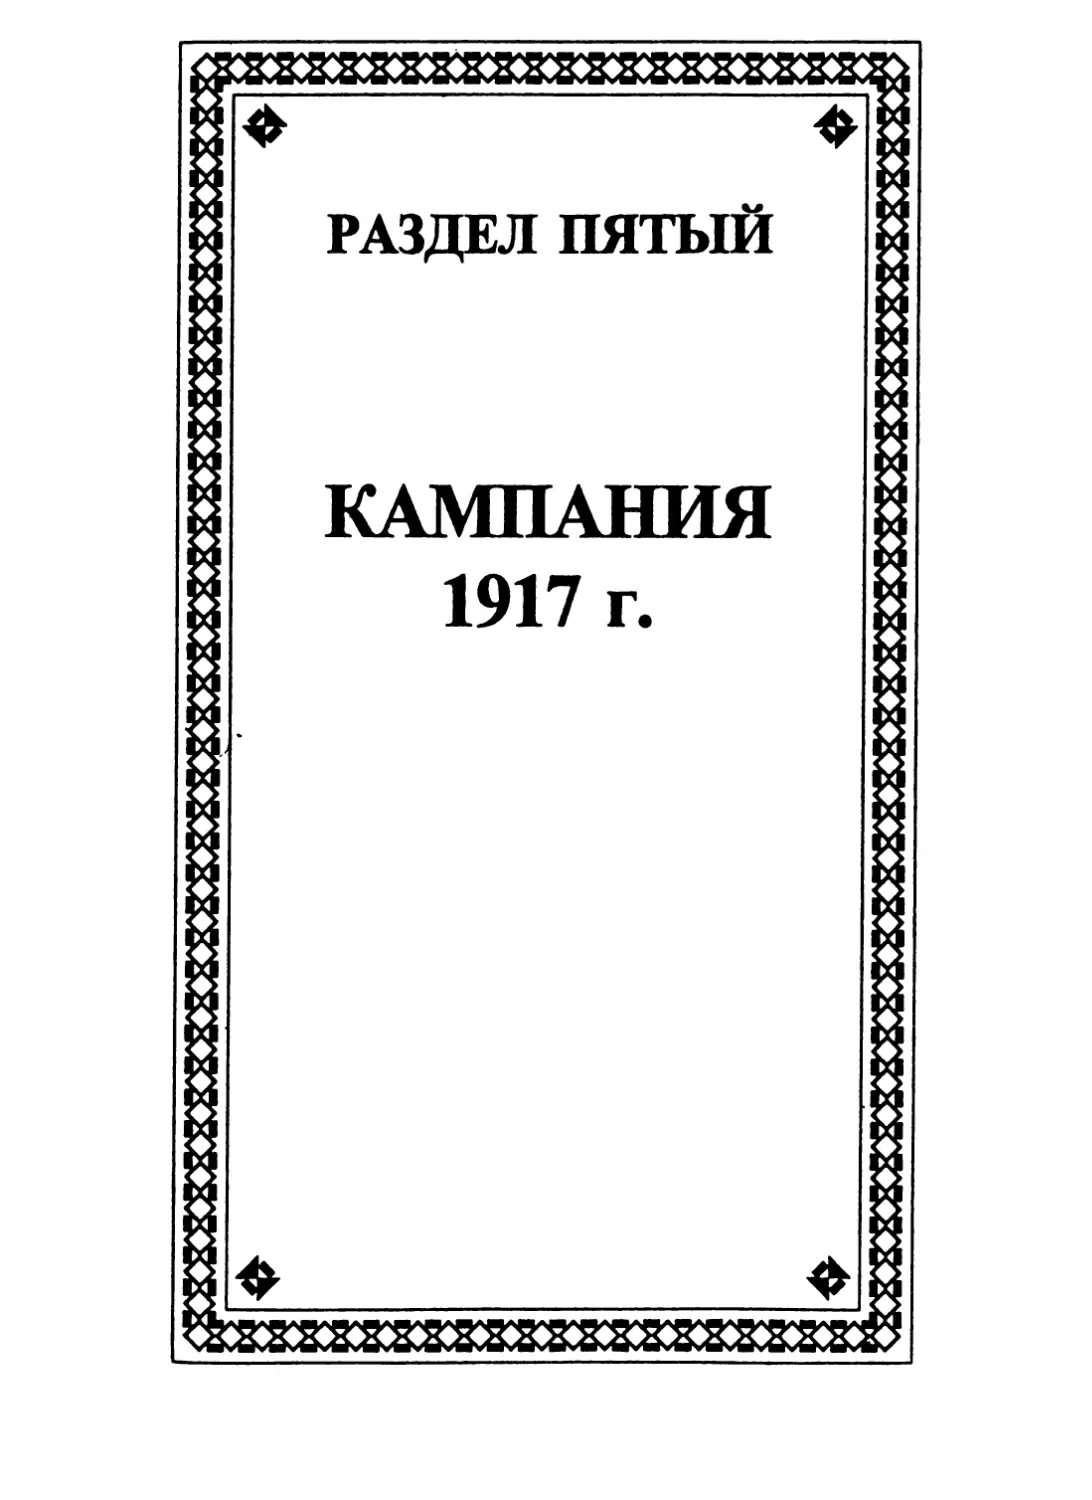 РАЗДЕЛ ПЯТЫЙ. КАМПАНИЯ 1917 г.